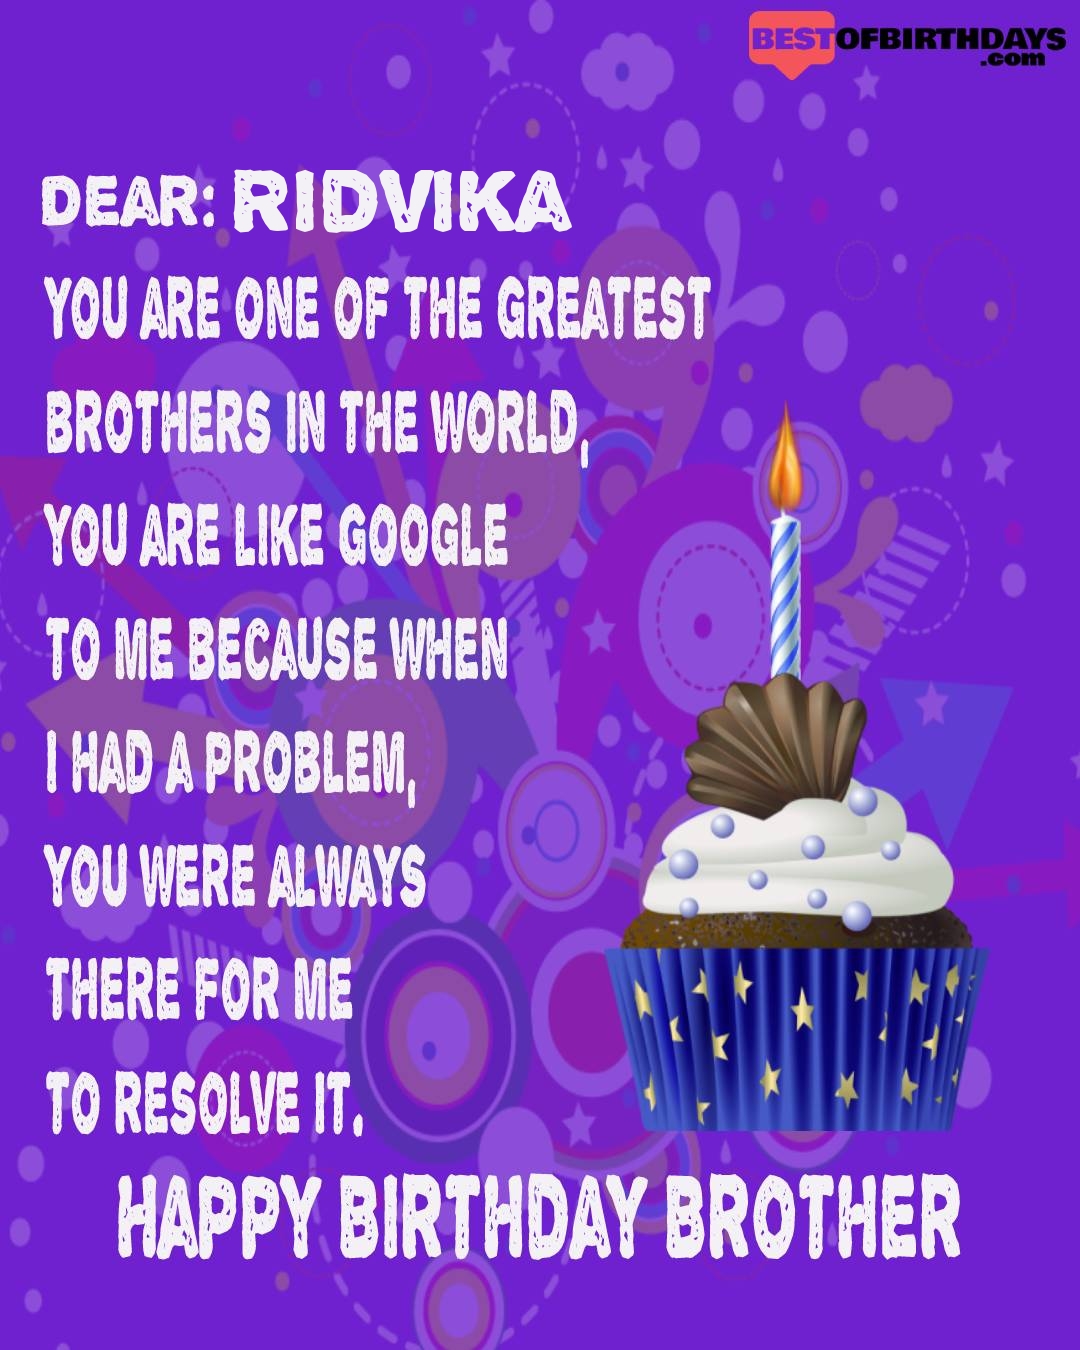 Happy birthday ridvika bhai brother bro